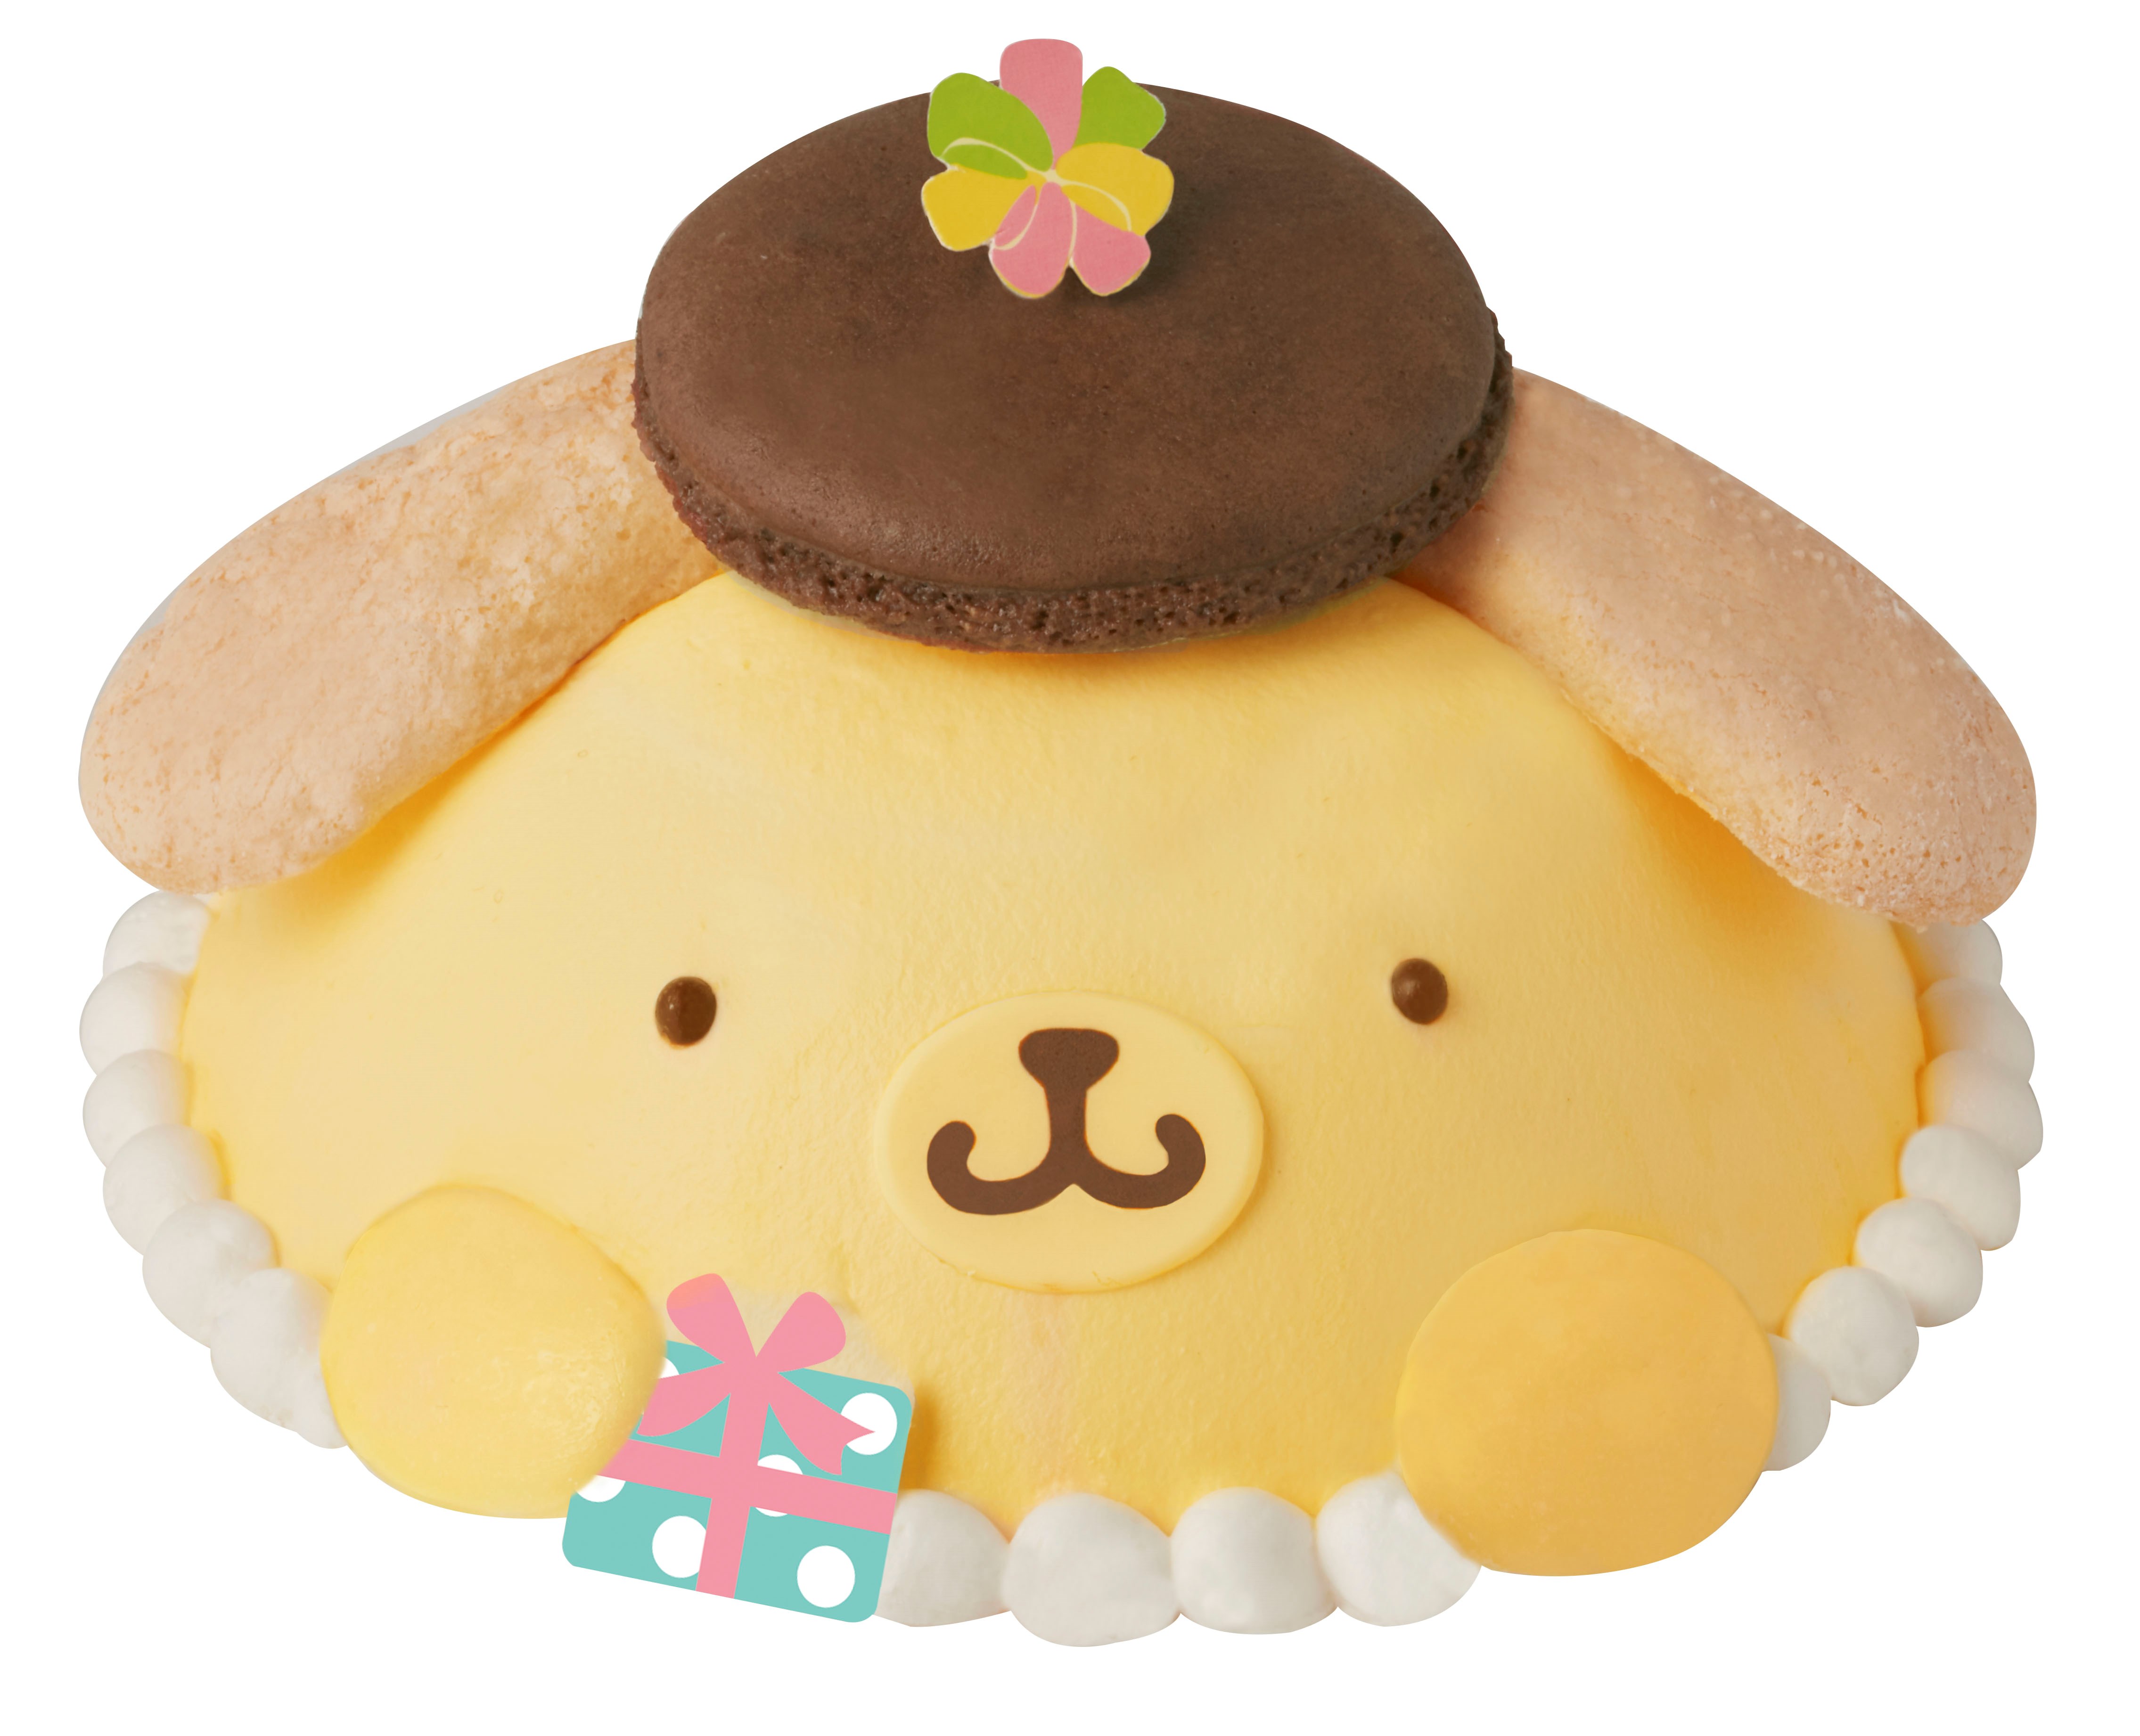 PetCake@貓狗天地: 哥基-Mocha & Latte 1歲骨型狗狗生日蛋糕